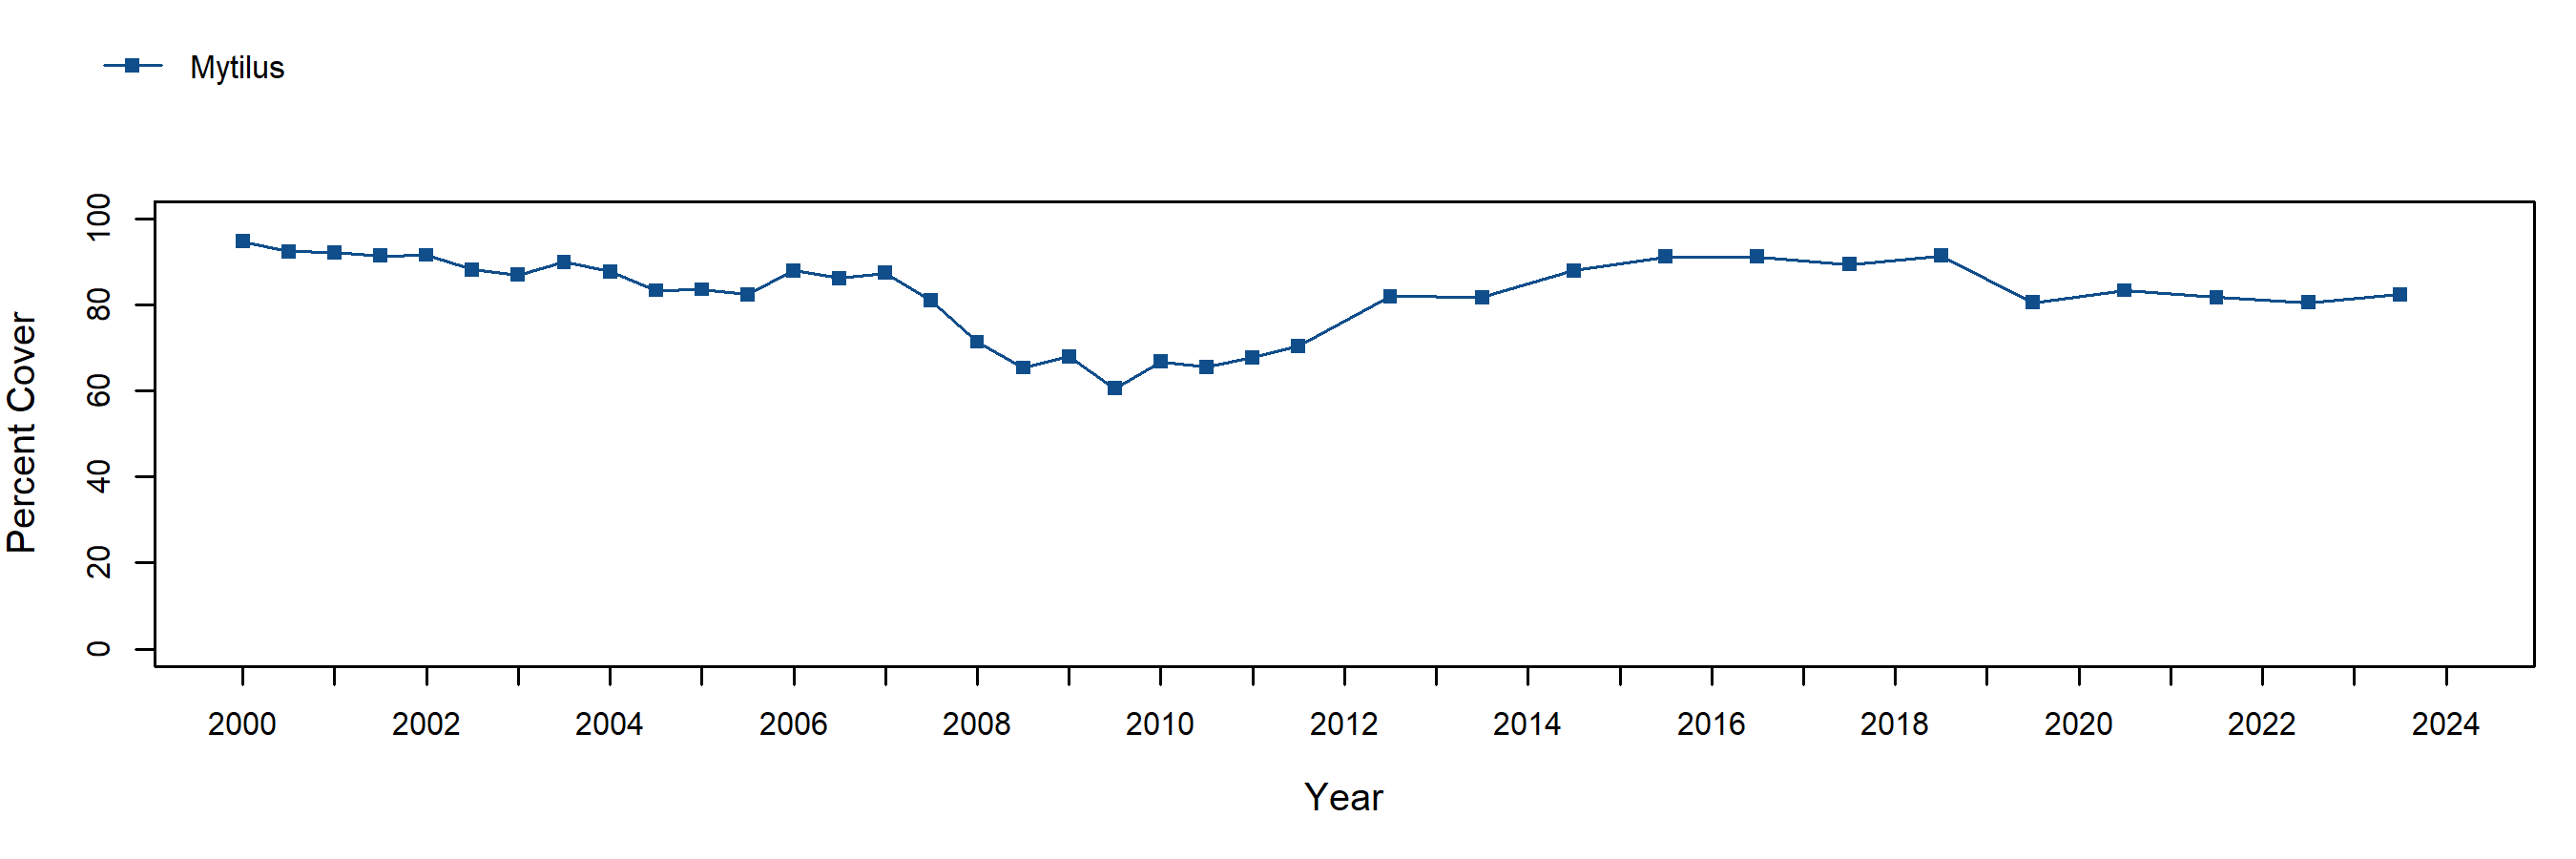 Stillwater Mytilus trend plot